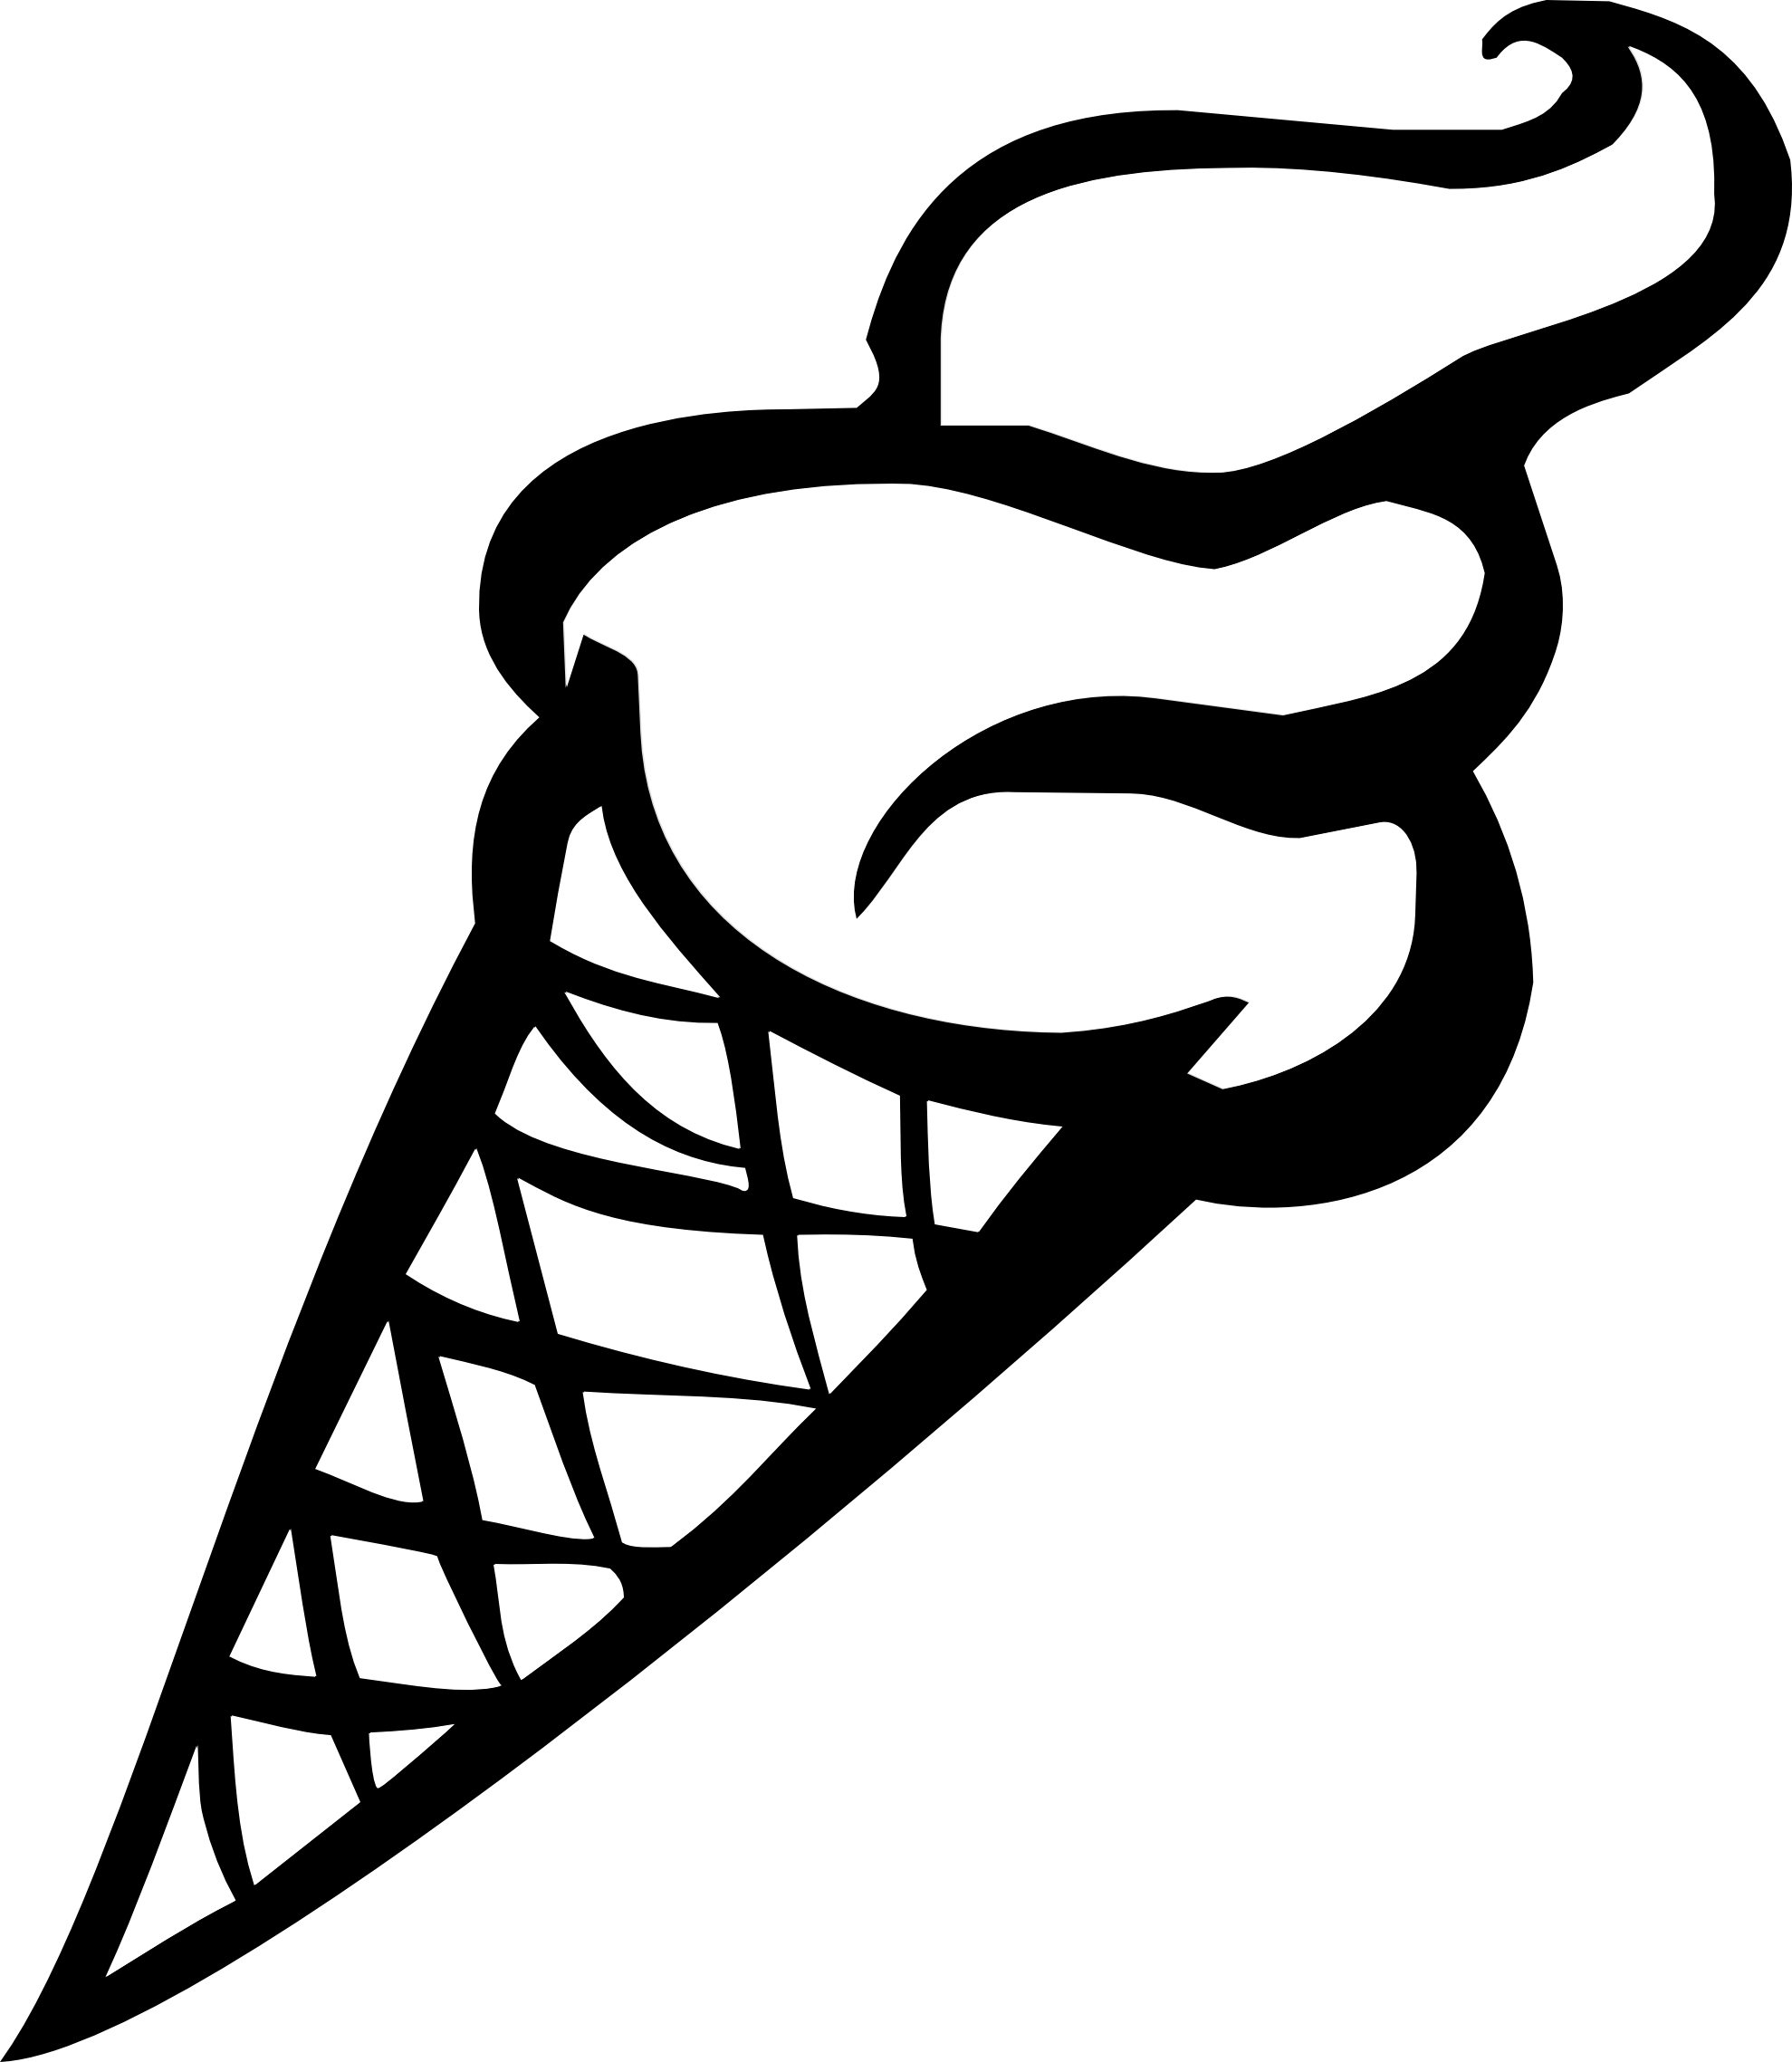 Food Ice Cream Cone Eis Black White Line Art Scalable Vector Graphics